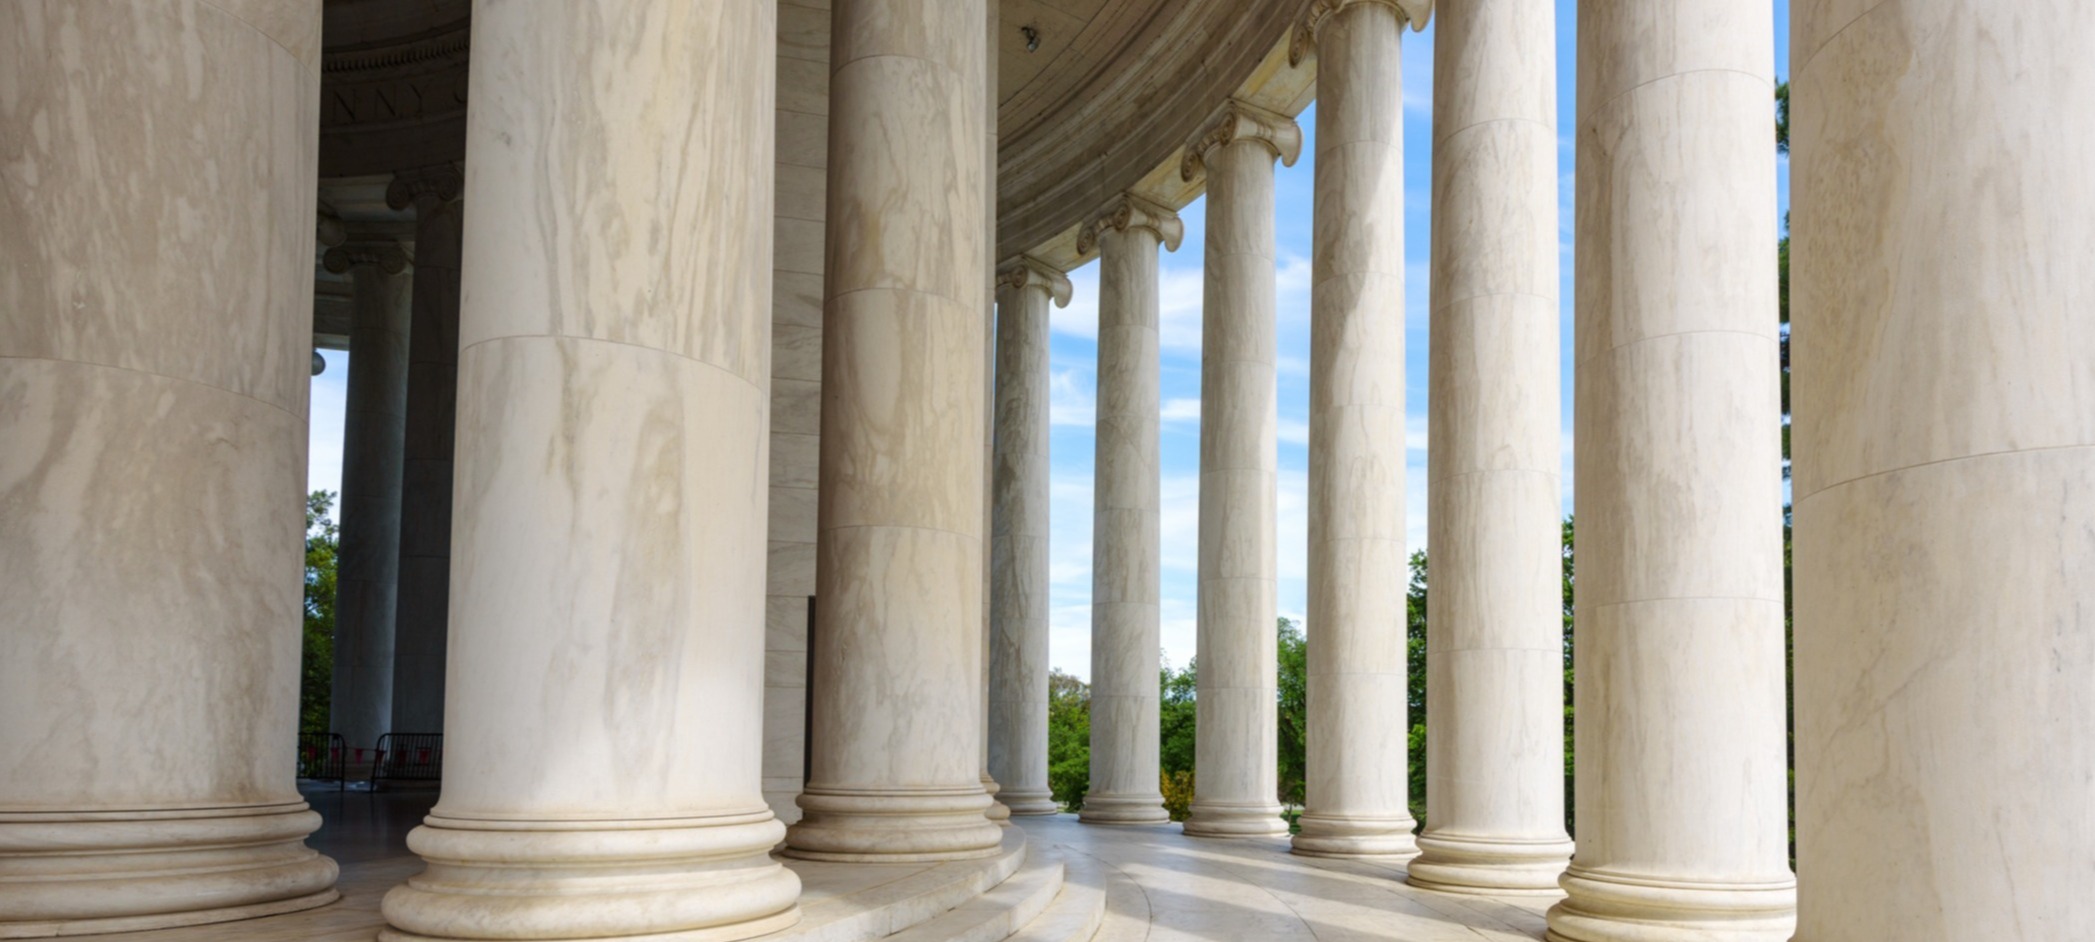 Ionic Columns at Jefferson Memorial, Washington DC Architecture